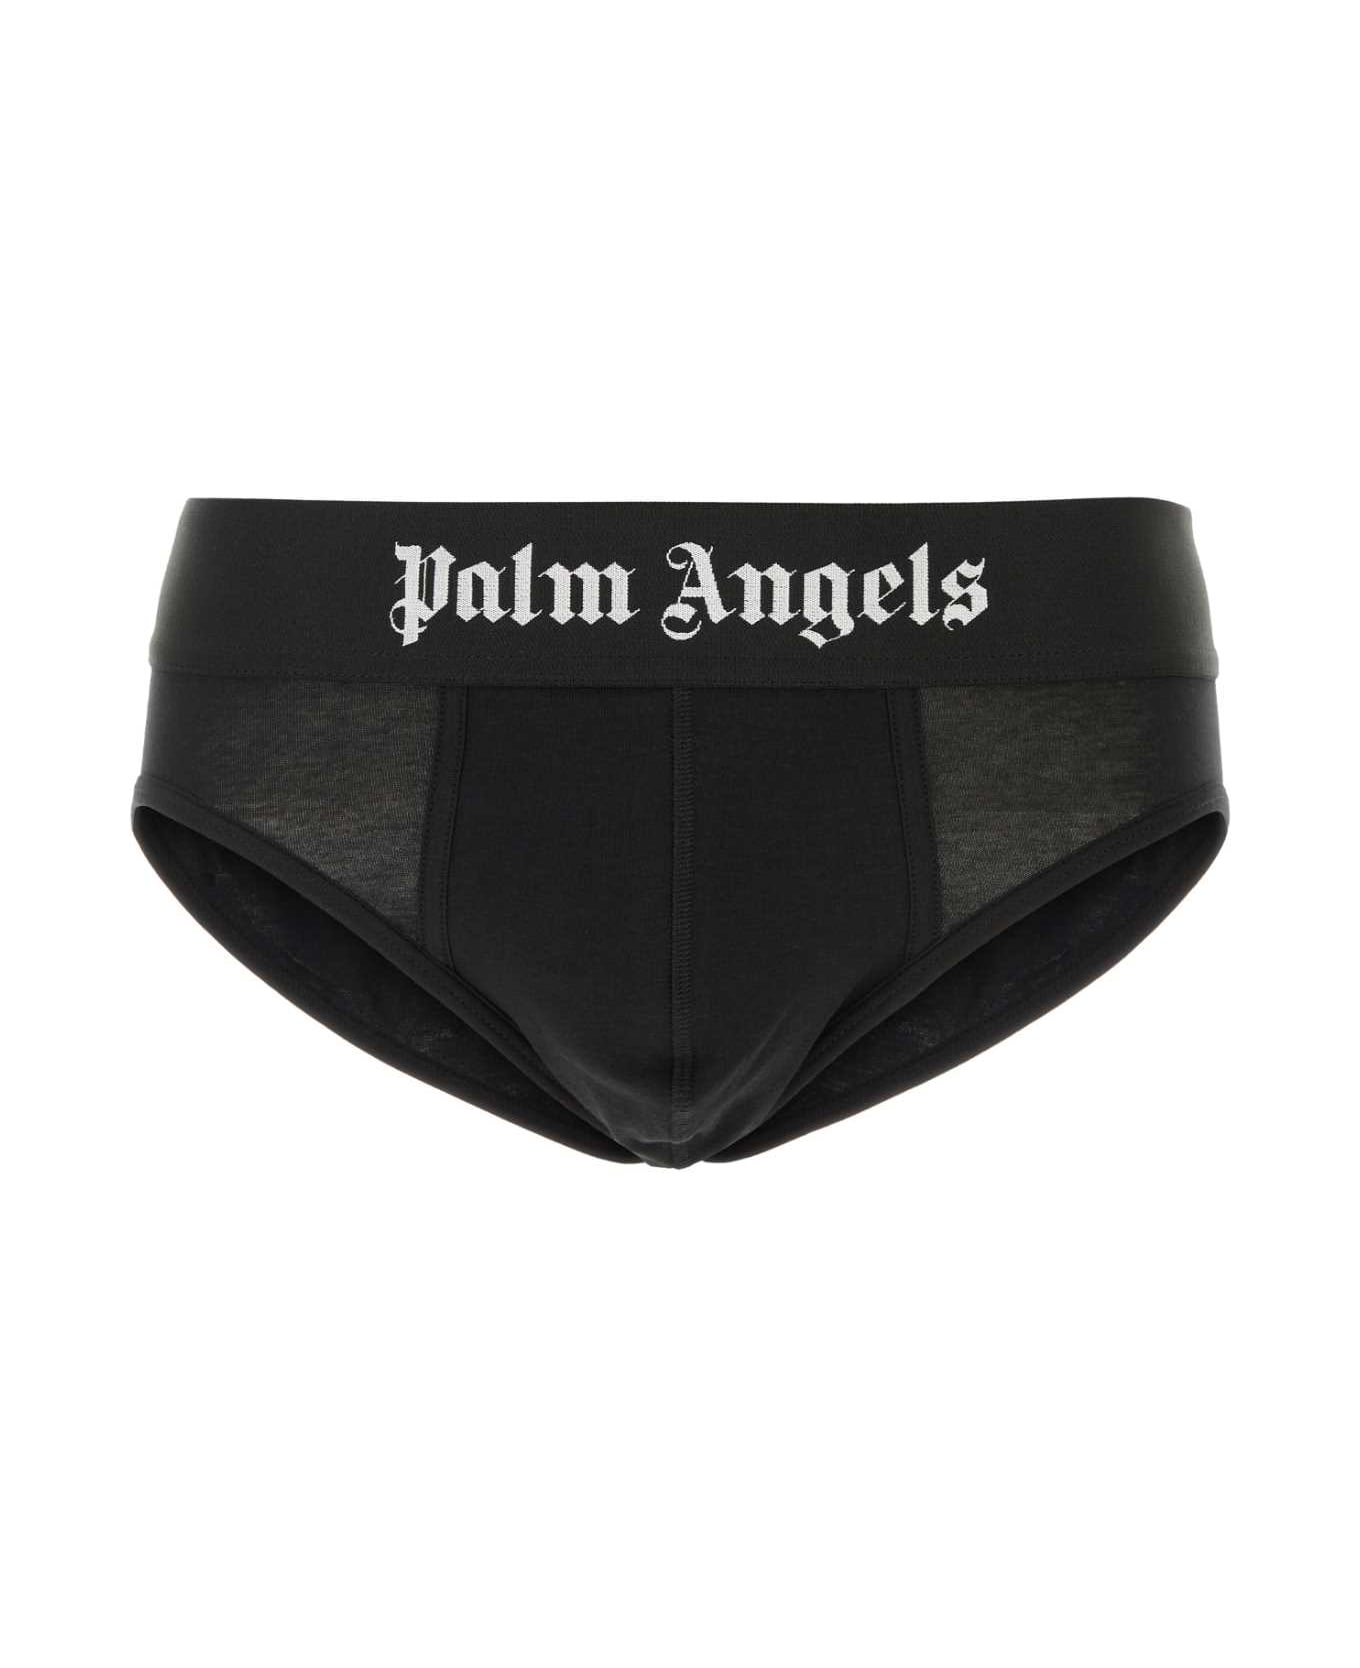 Palm Angels Black Stretch Cotton Brief Set - BLACKBLACK